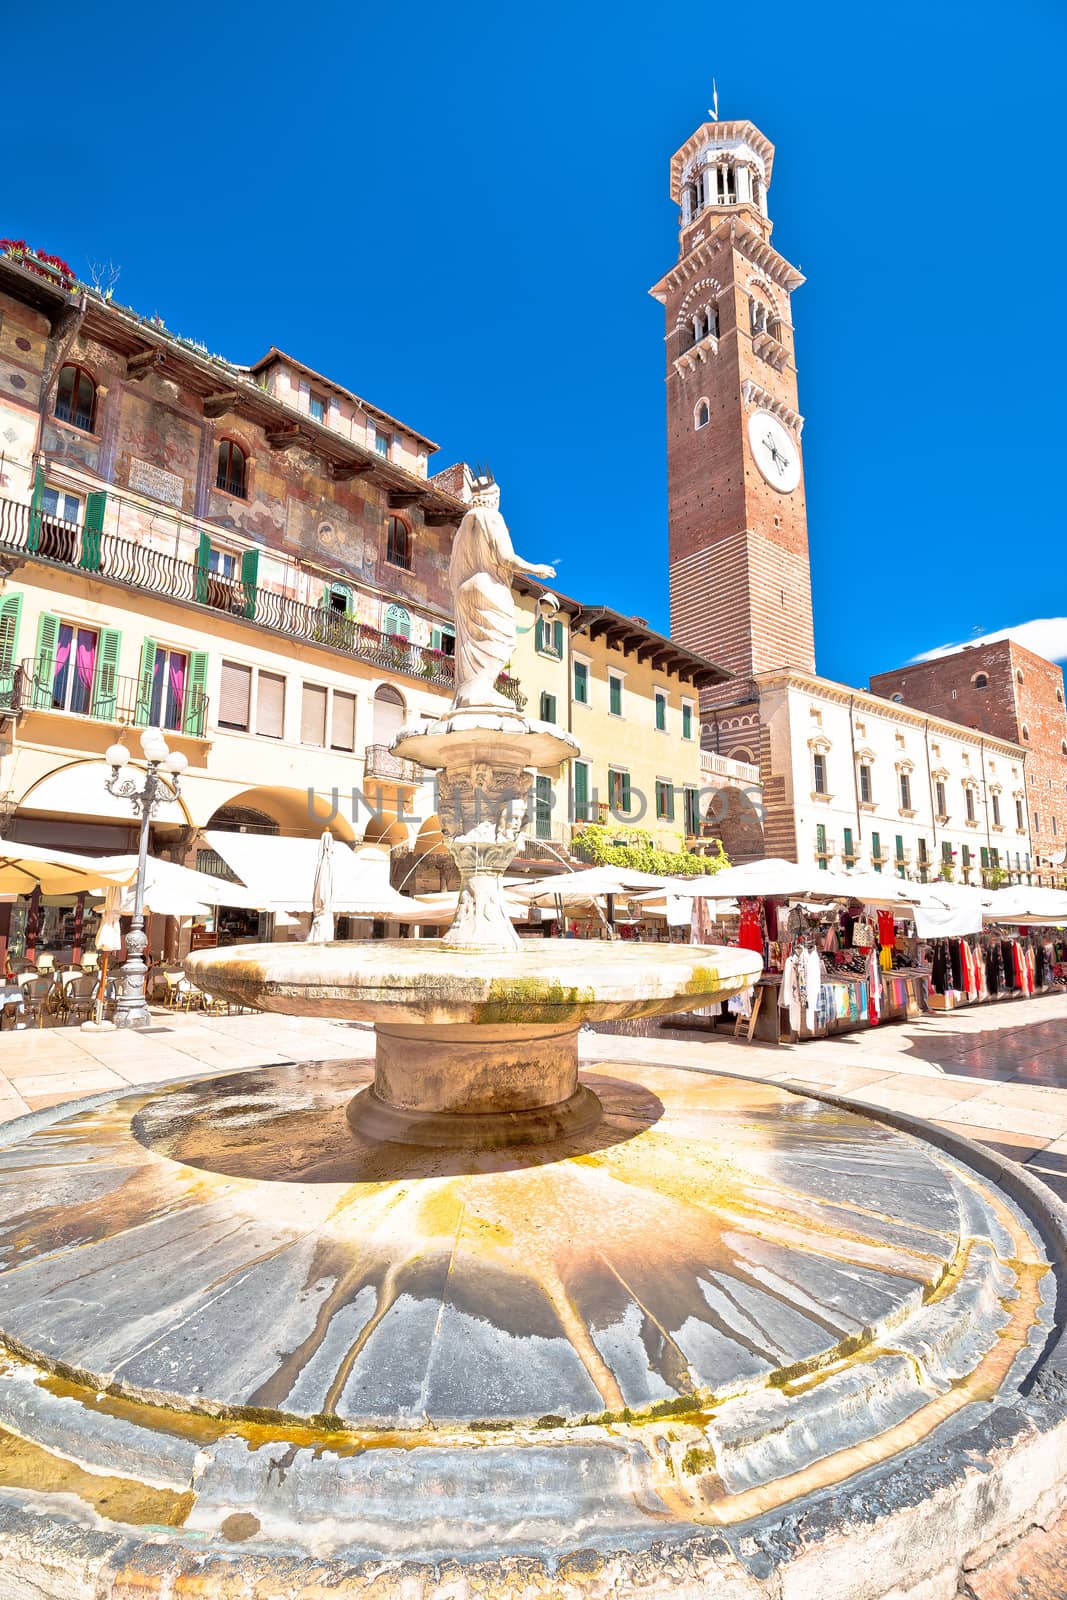 Piazza delle erbe in Verona street and market view with Lamberti tower, tourist destination in Veneto region of Italy
